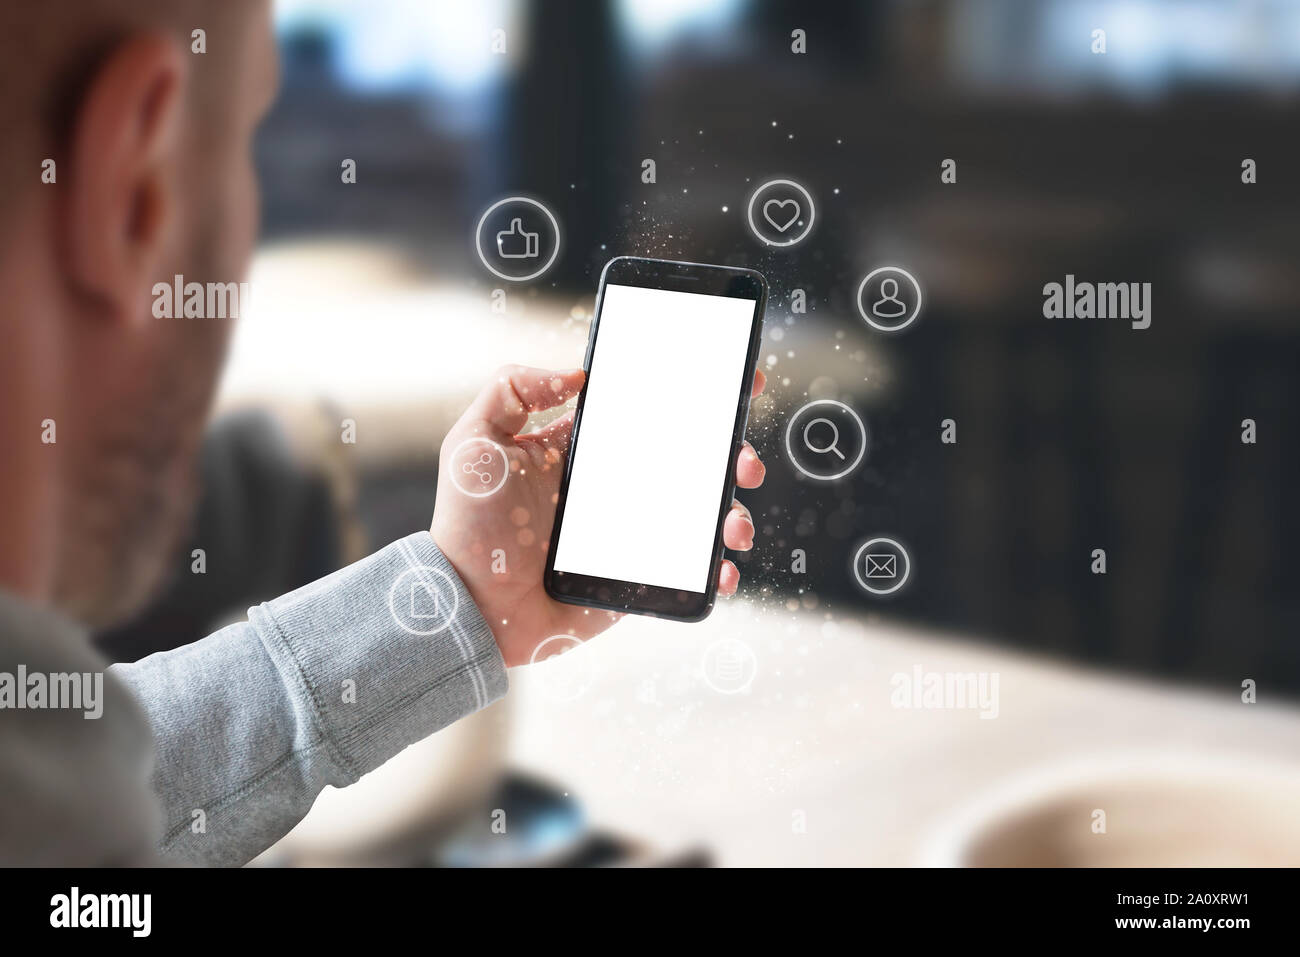 Telefon mockup mit Social Network icons Konzept umgeben. Stockfoto